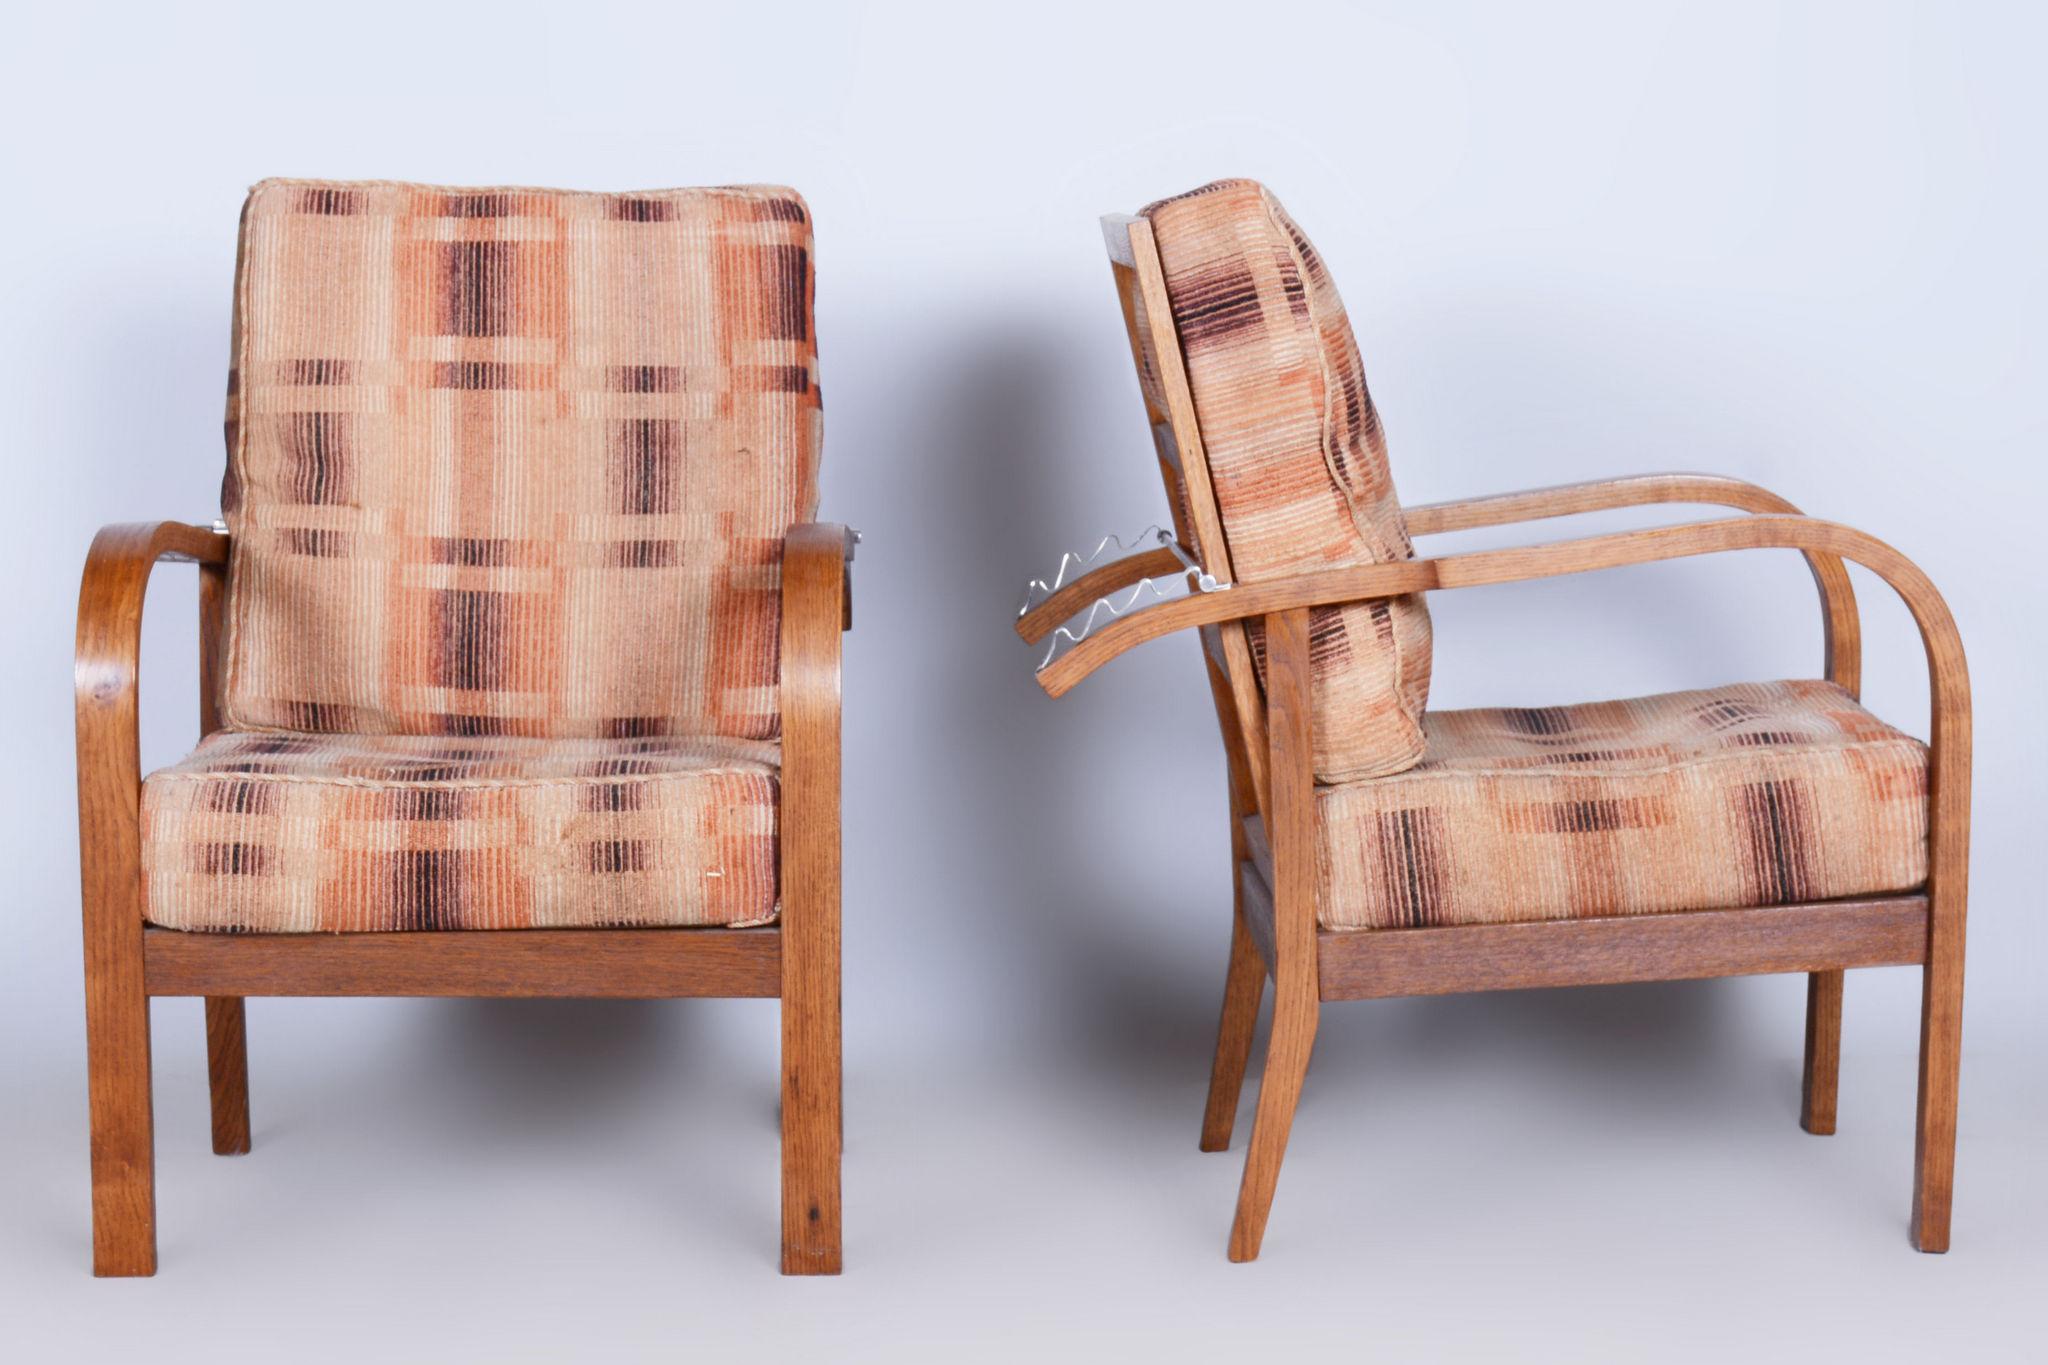 Wood Restored ArtDeco Pair of Reclining Chairs, J. Halabala, Oak, Czechia, 1930s For Sale